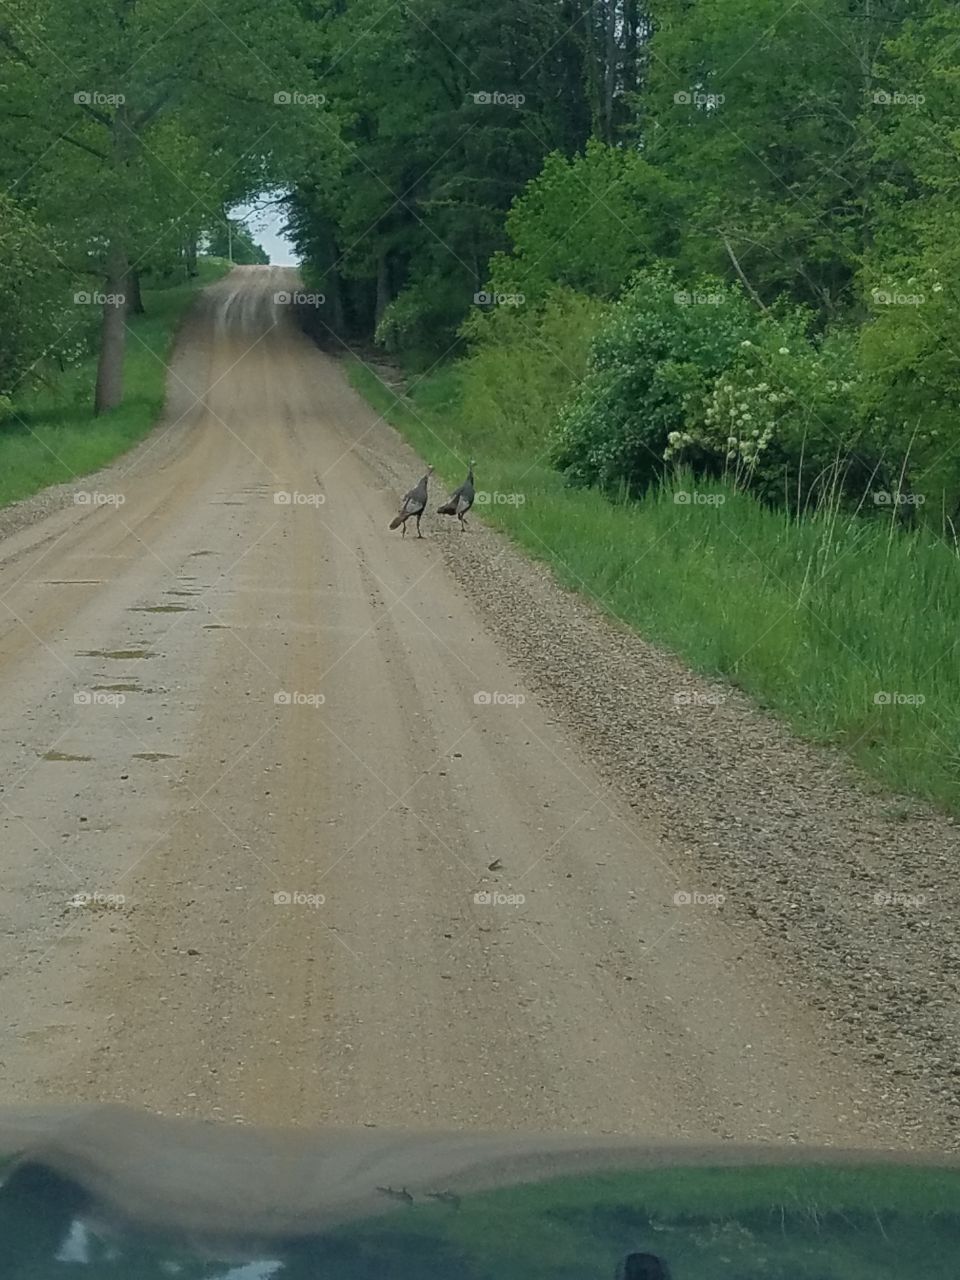 Turkeys crossing a dirt road